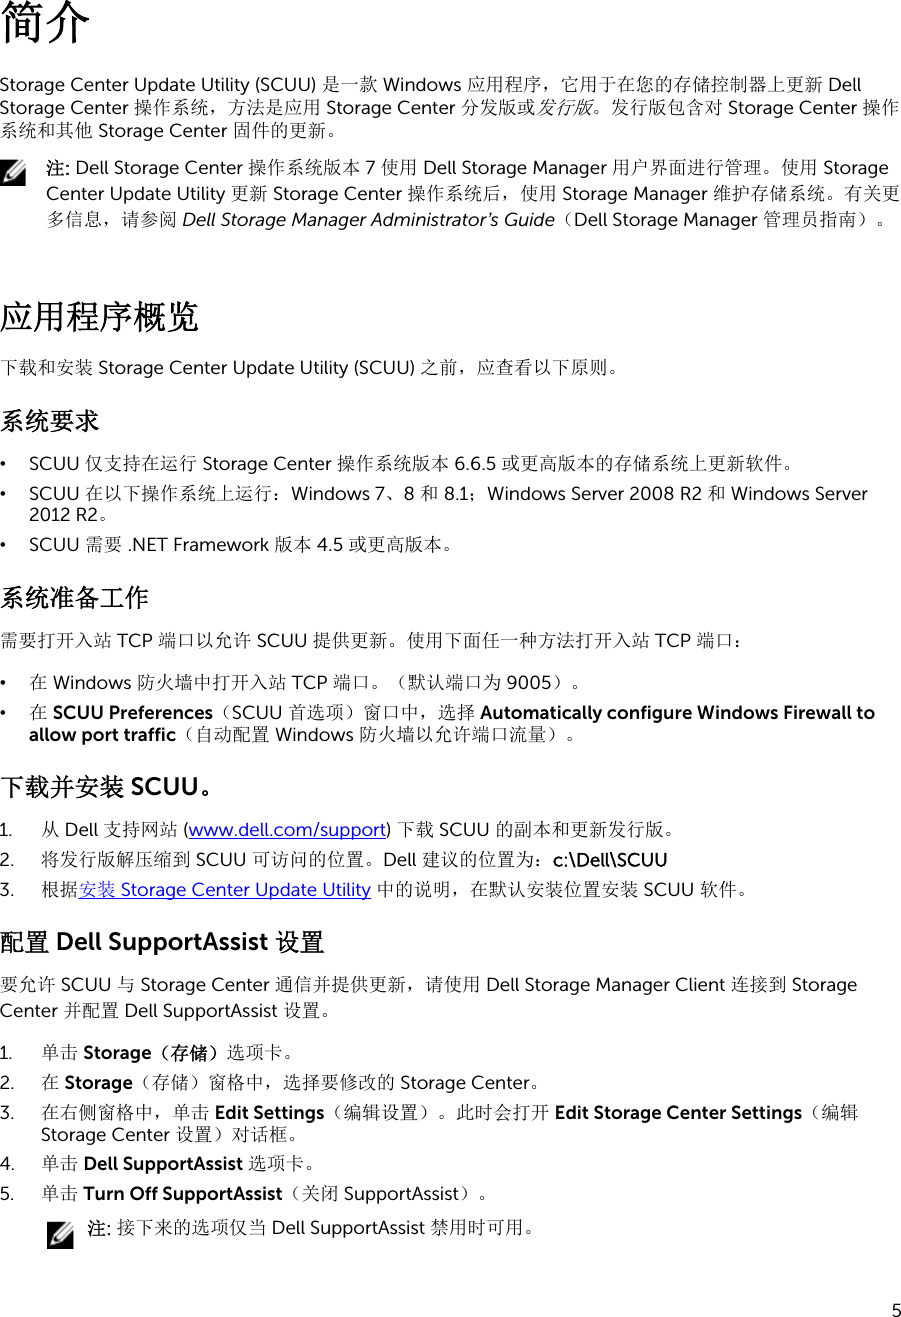 Page 5 of 7 - Dell Dell-compellent-sc4020 Storage Center 操作系统版本 7 Update Utility 管理员指南 使用手册 其他文档 - Storage-sc2000 Administrator Guide9 Zh-cn